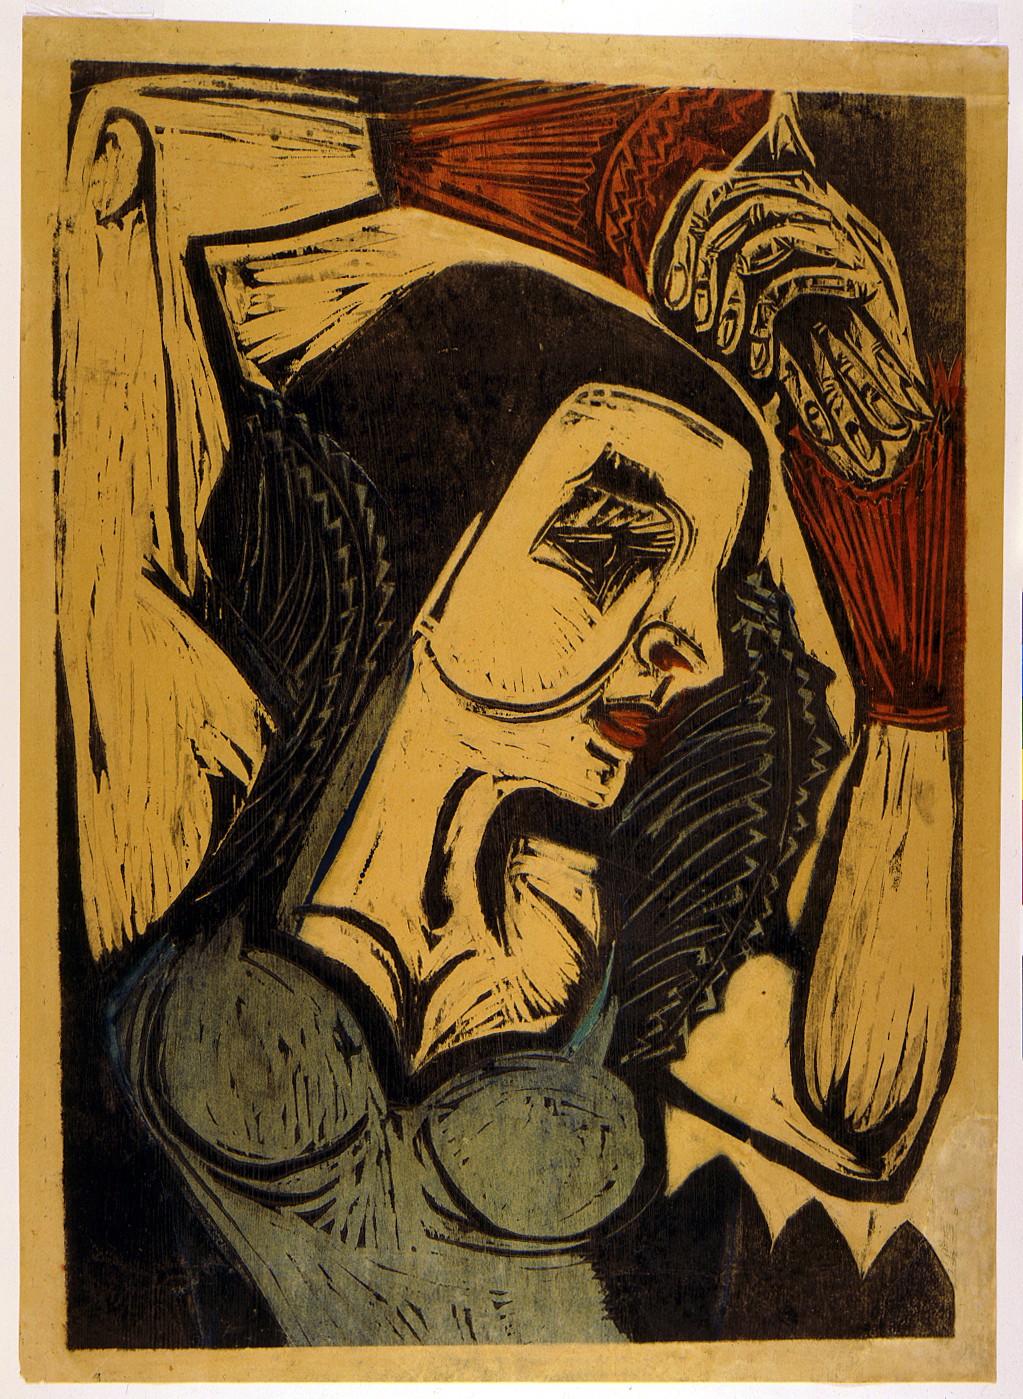 Image: Ernst Ludwig Kirchner, Plakat Nina Hard (Poster of Nina Hard), 1921